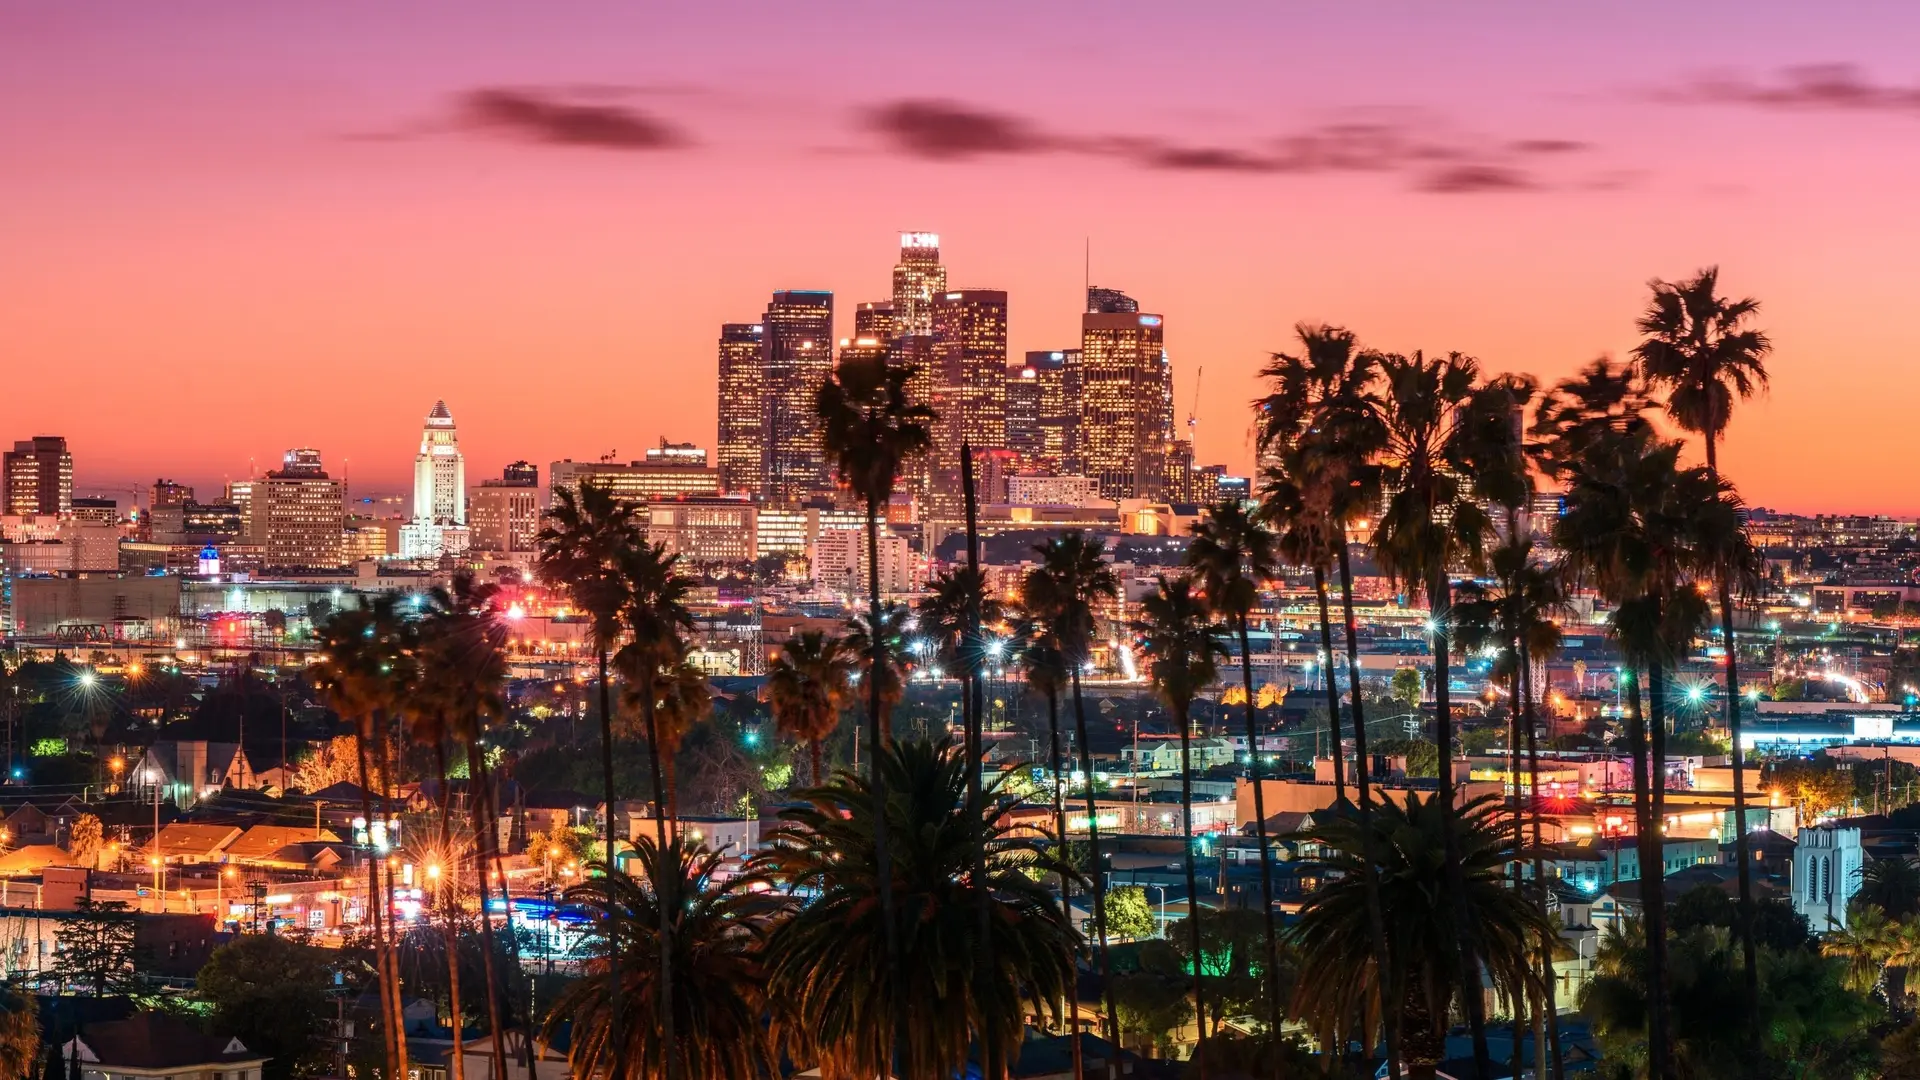 Destinations Articles - Los Angeles Travel Guide